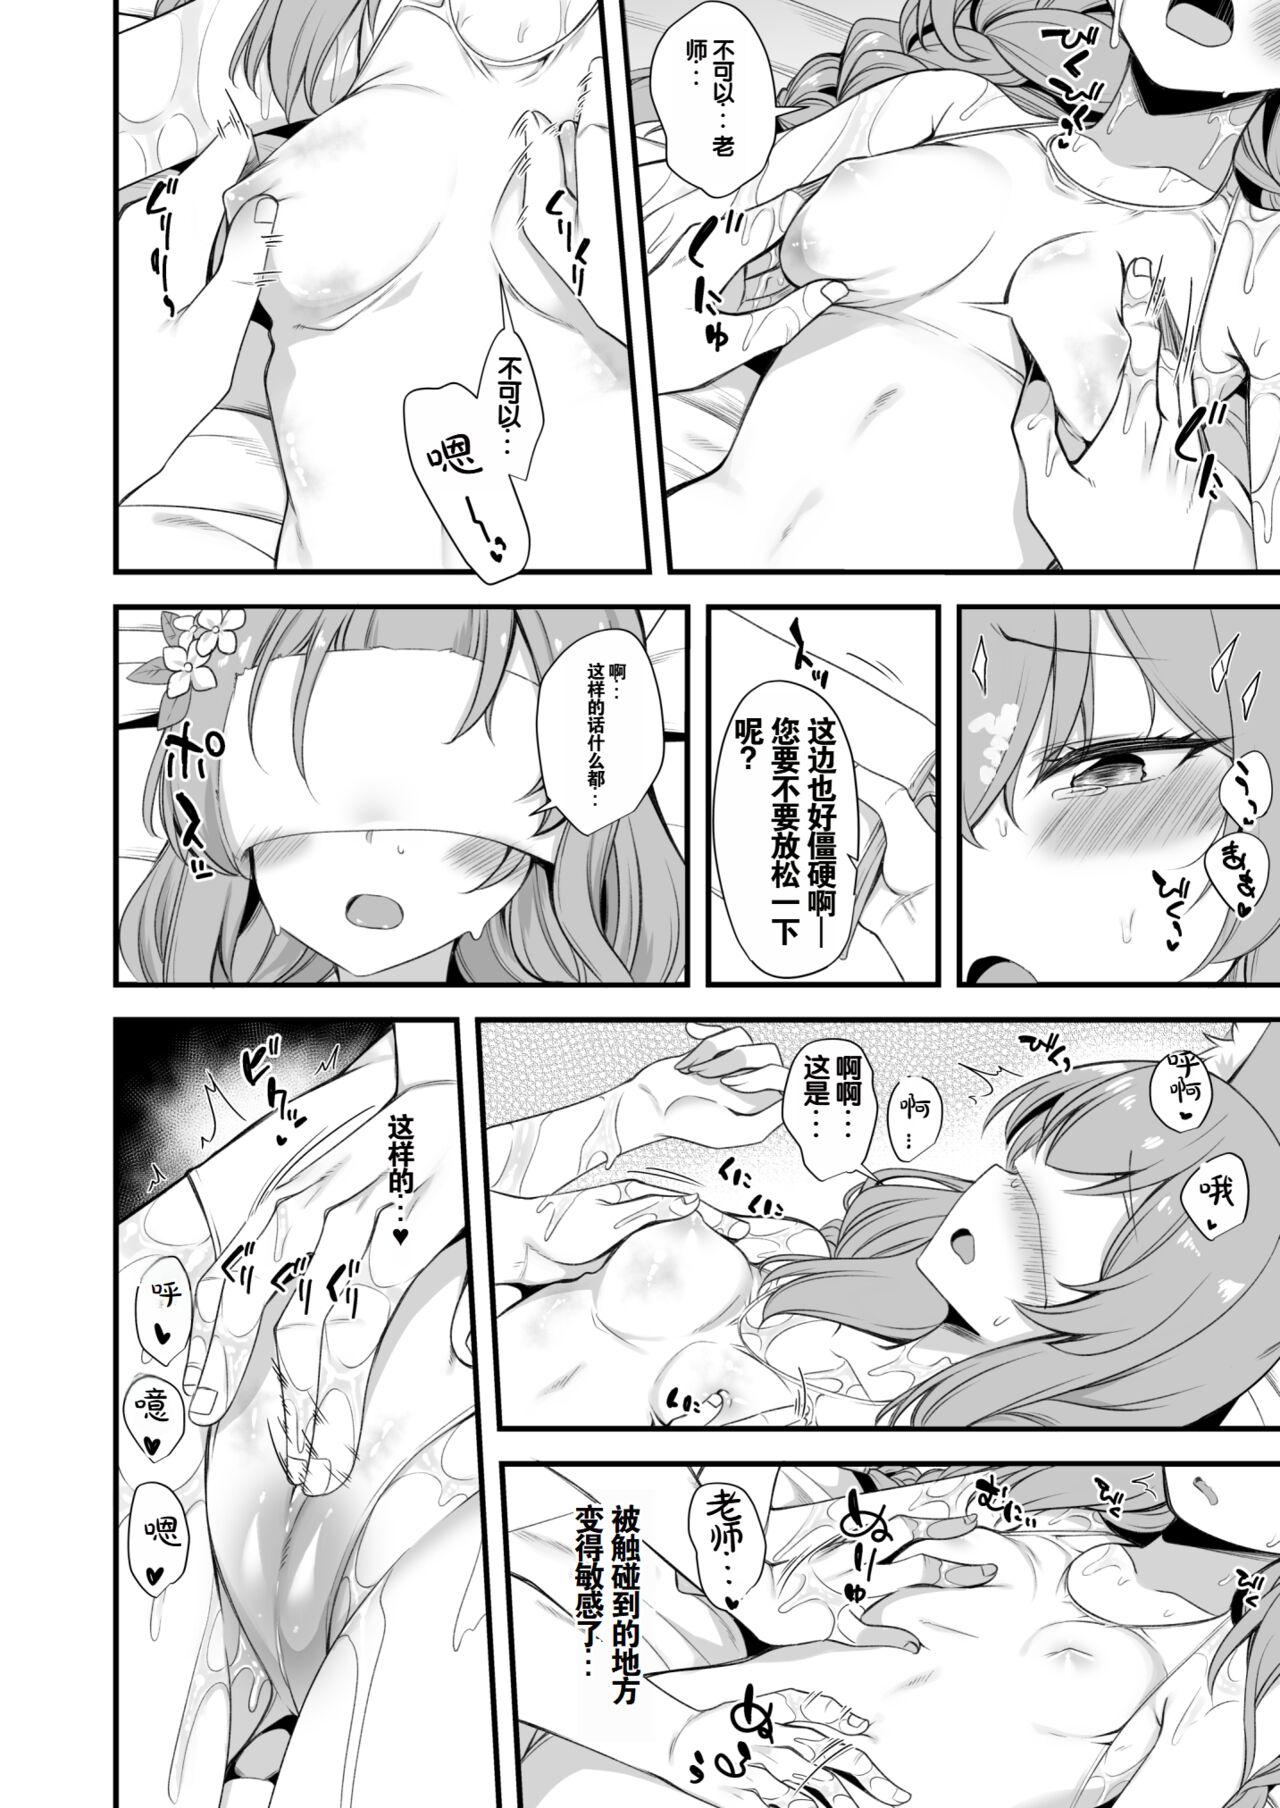 Ass Fetish Mari Oil Massage Ecchi Manga - Blue archive 8teenxxx - Page 4